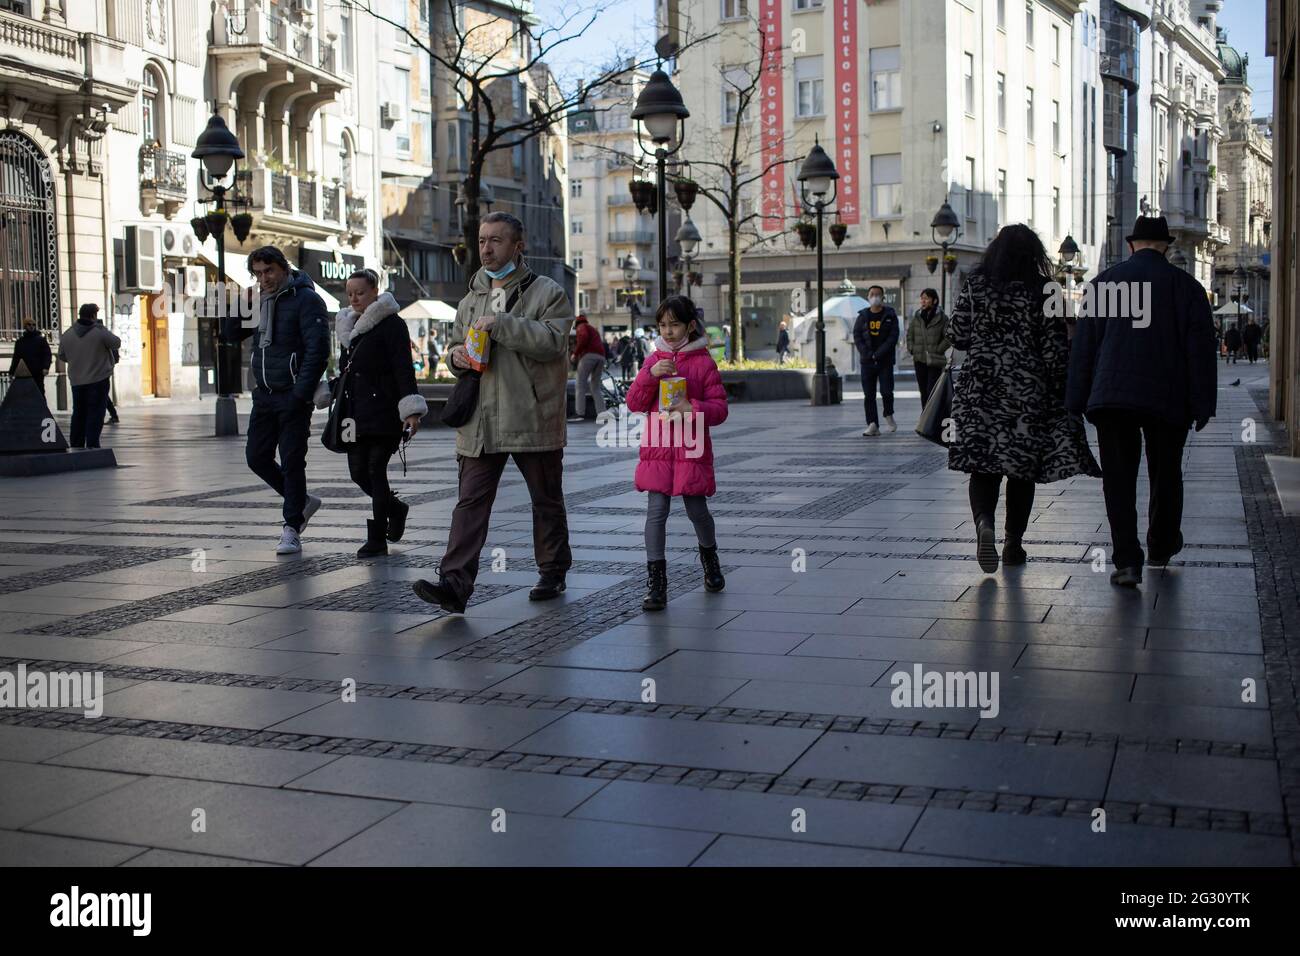 Serbia, Mar 7, 2021: Pedestrians walking down the Knez Mihailova Street in Belgrade Stock Photo